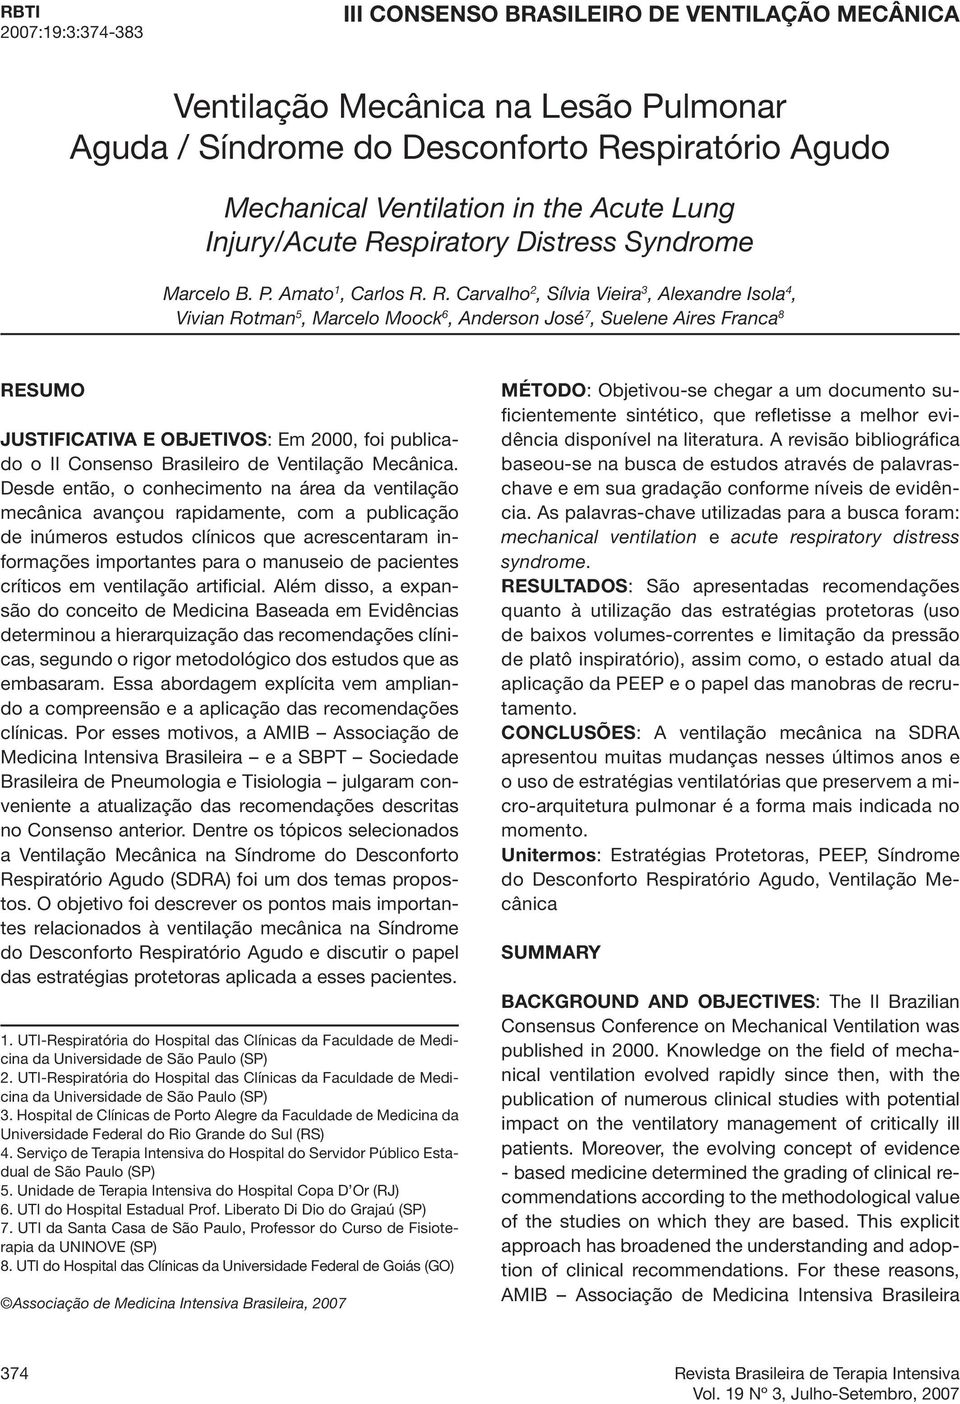 spiratory Distress Syndrome Marcelo B. P. Amato 1, Carlos R.